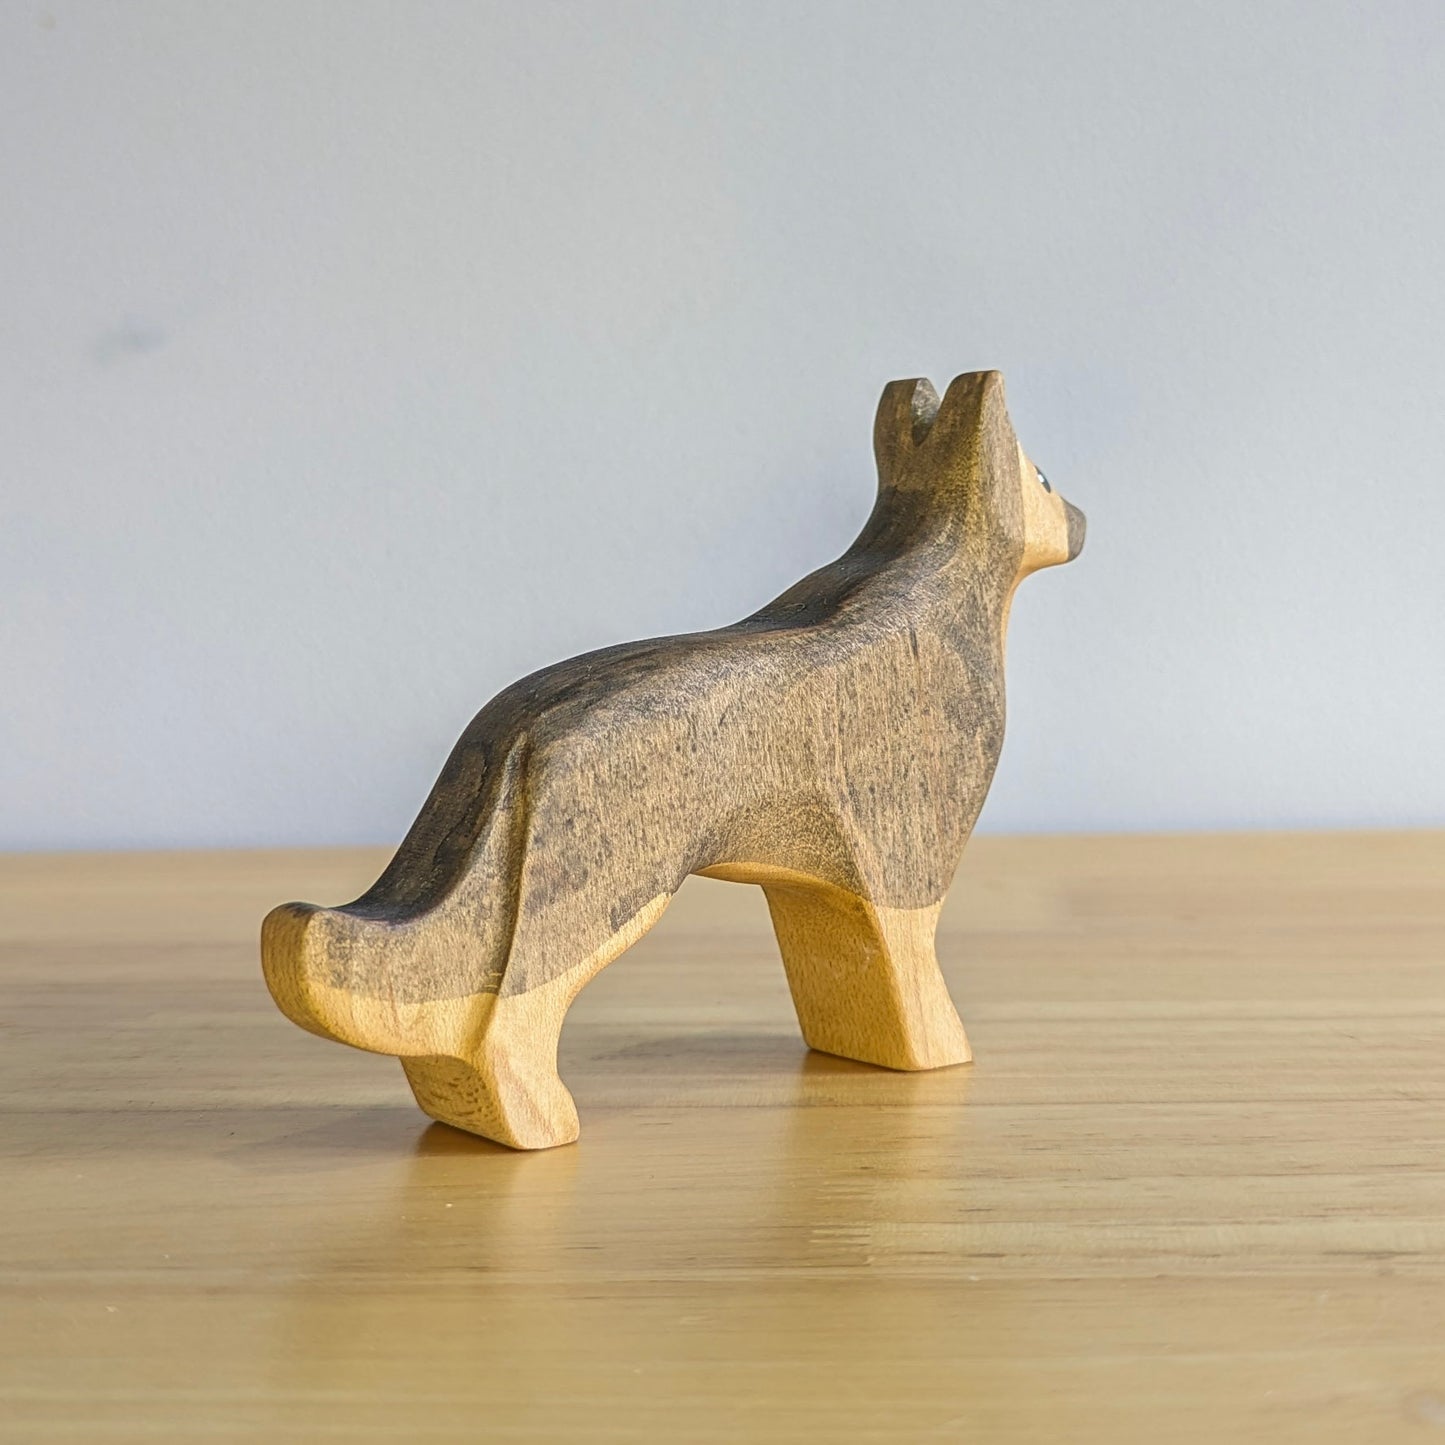 German Shepherd Dog Wooden Toy